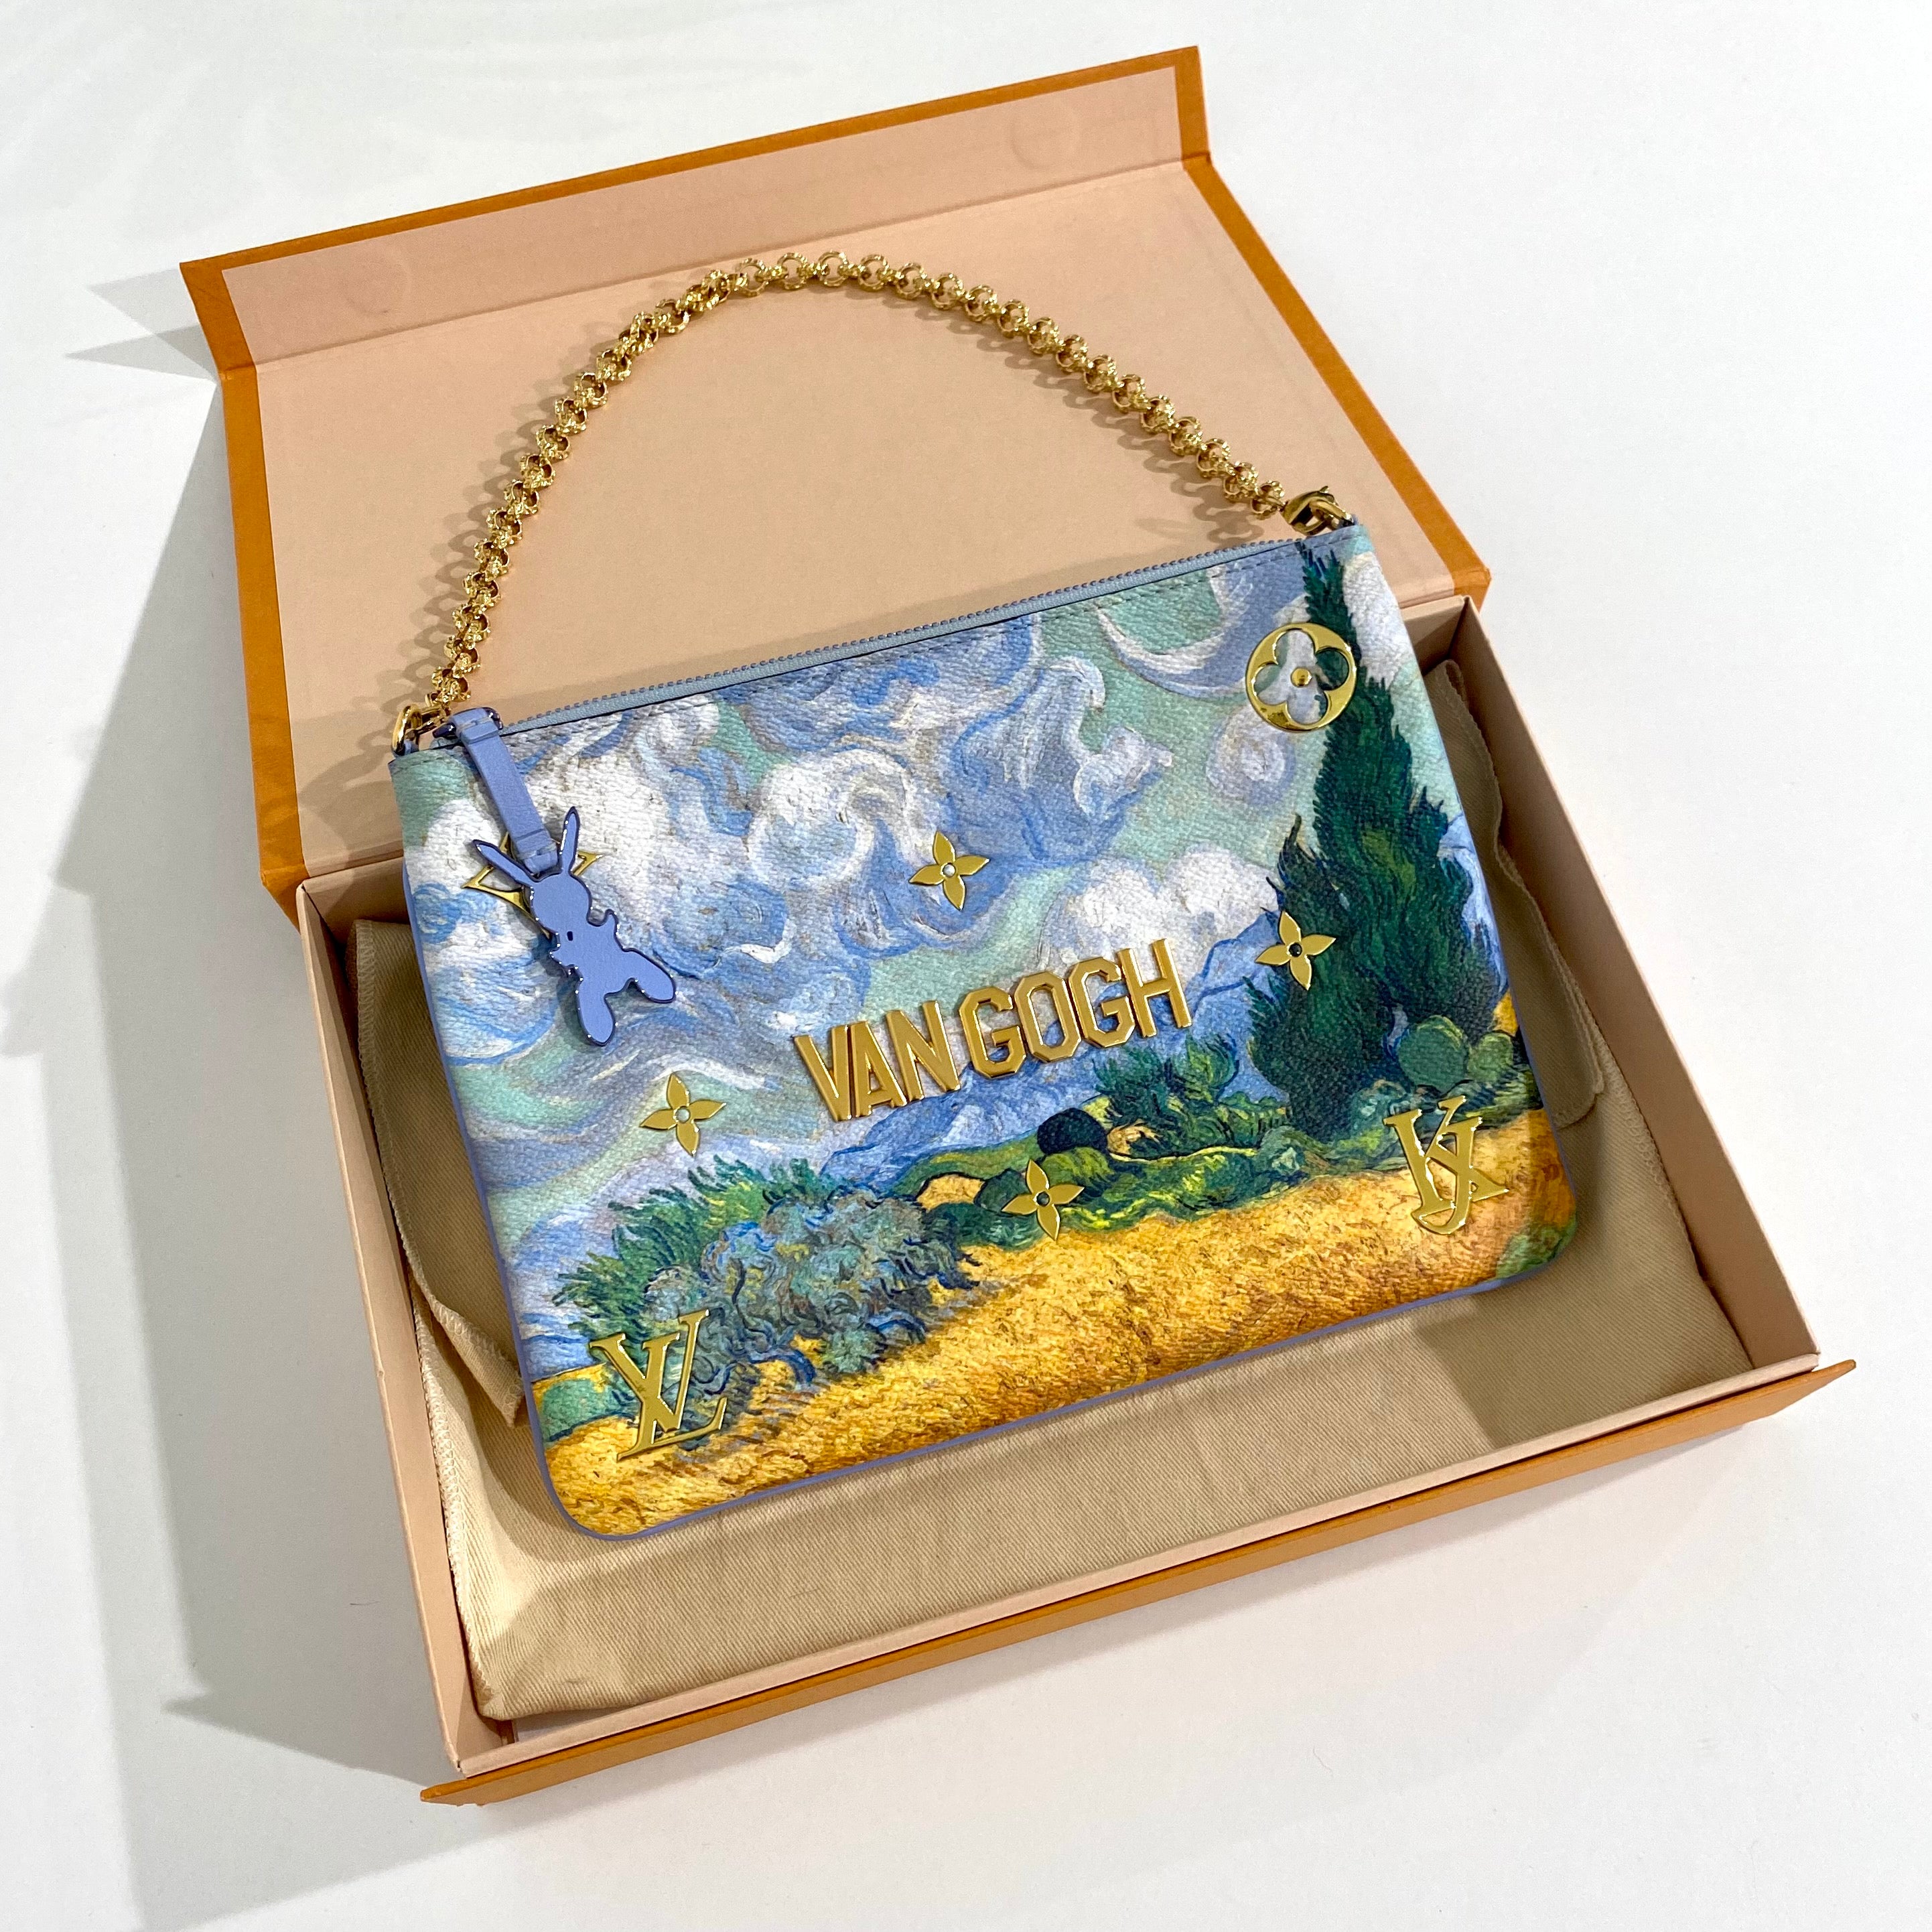 Louis Vuitton, Bags, W Receipt New Louis Vuitton Jeff Koons Van Gogh